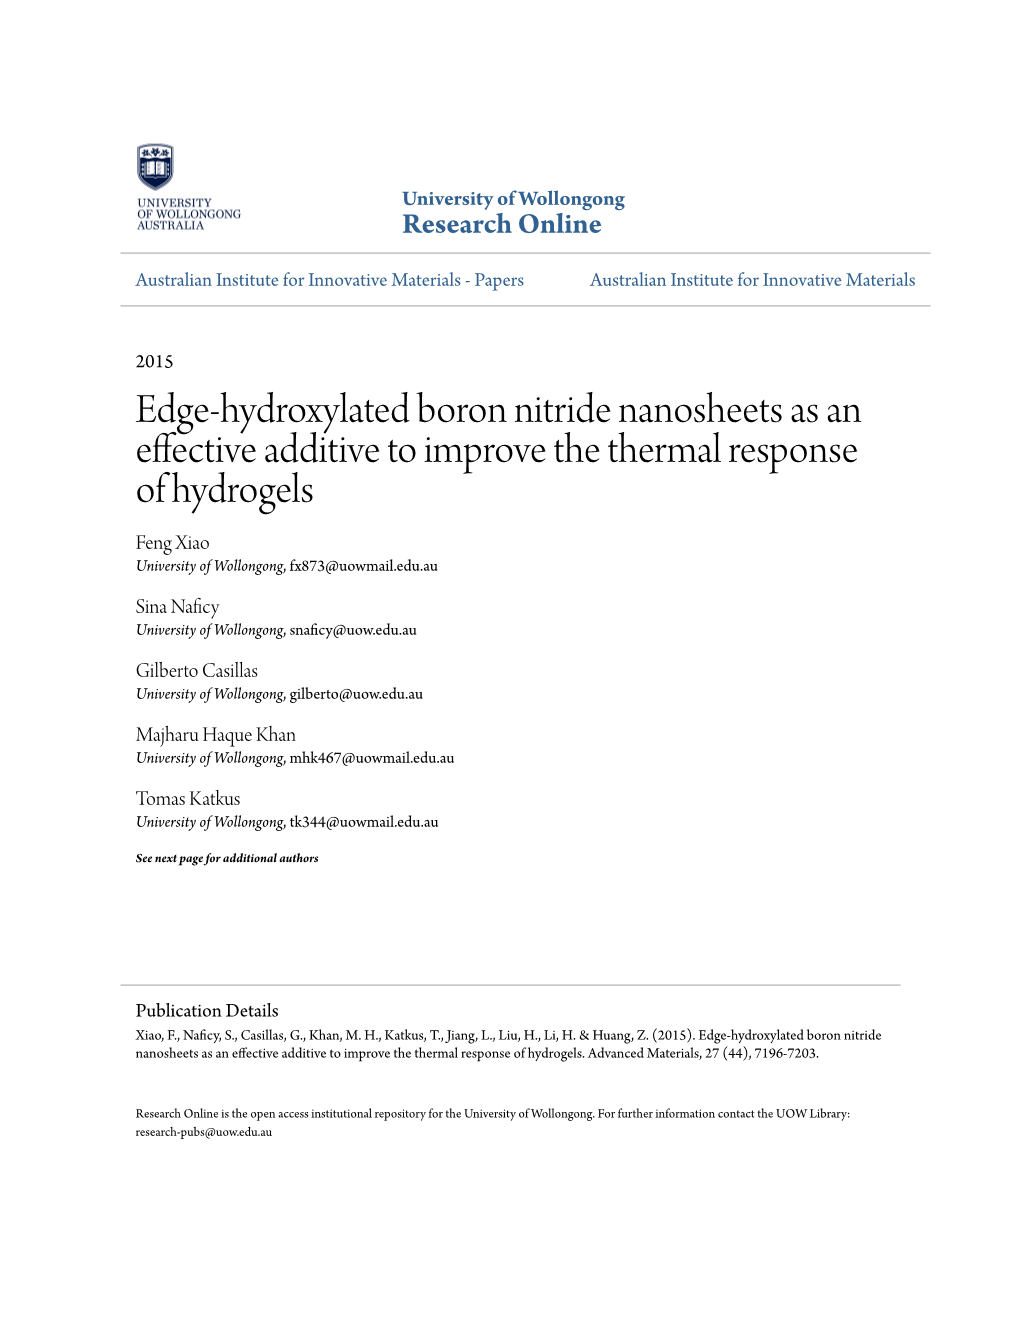 Edge-Hydroxylated Boron Nitride Nanosheets As an Effective Additive